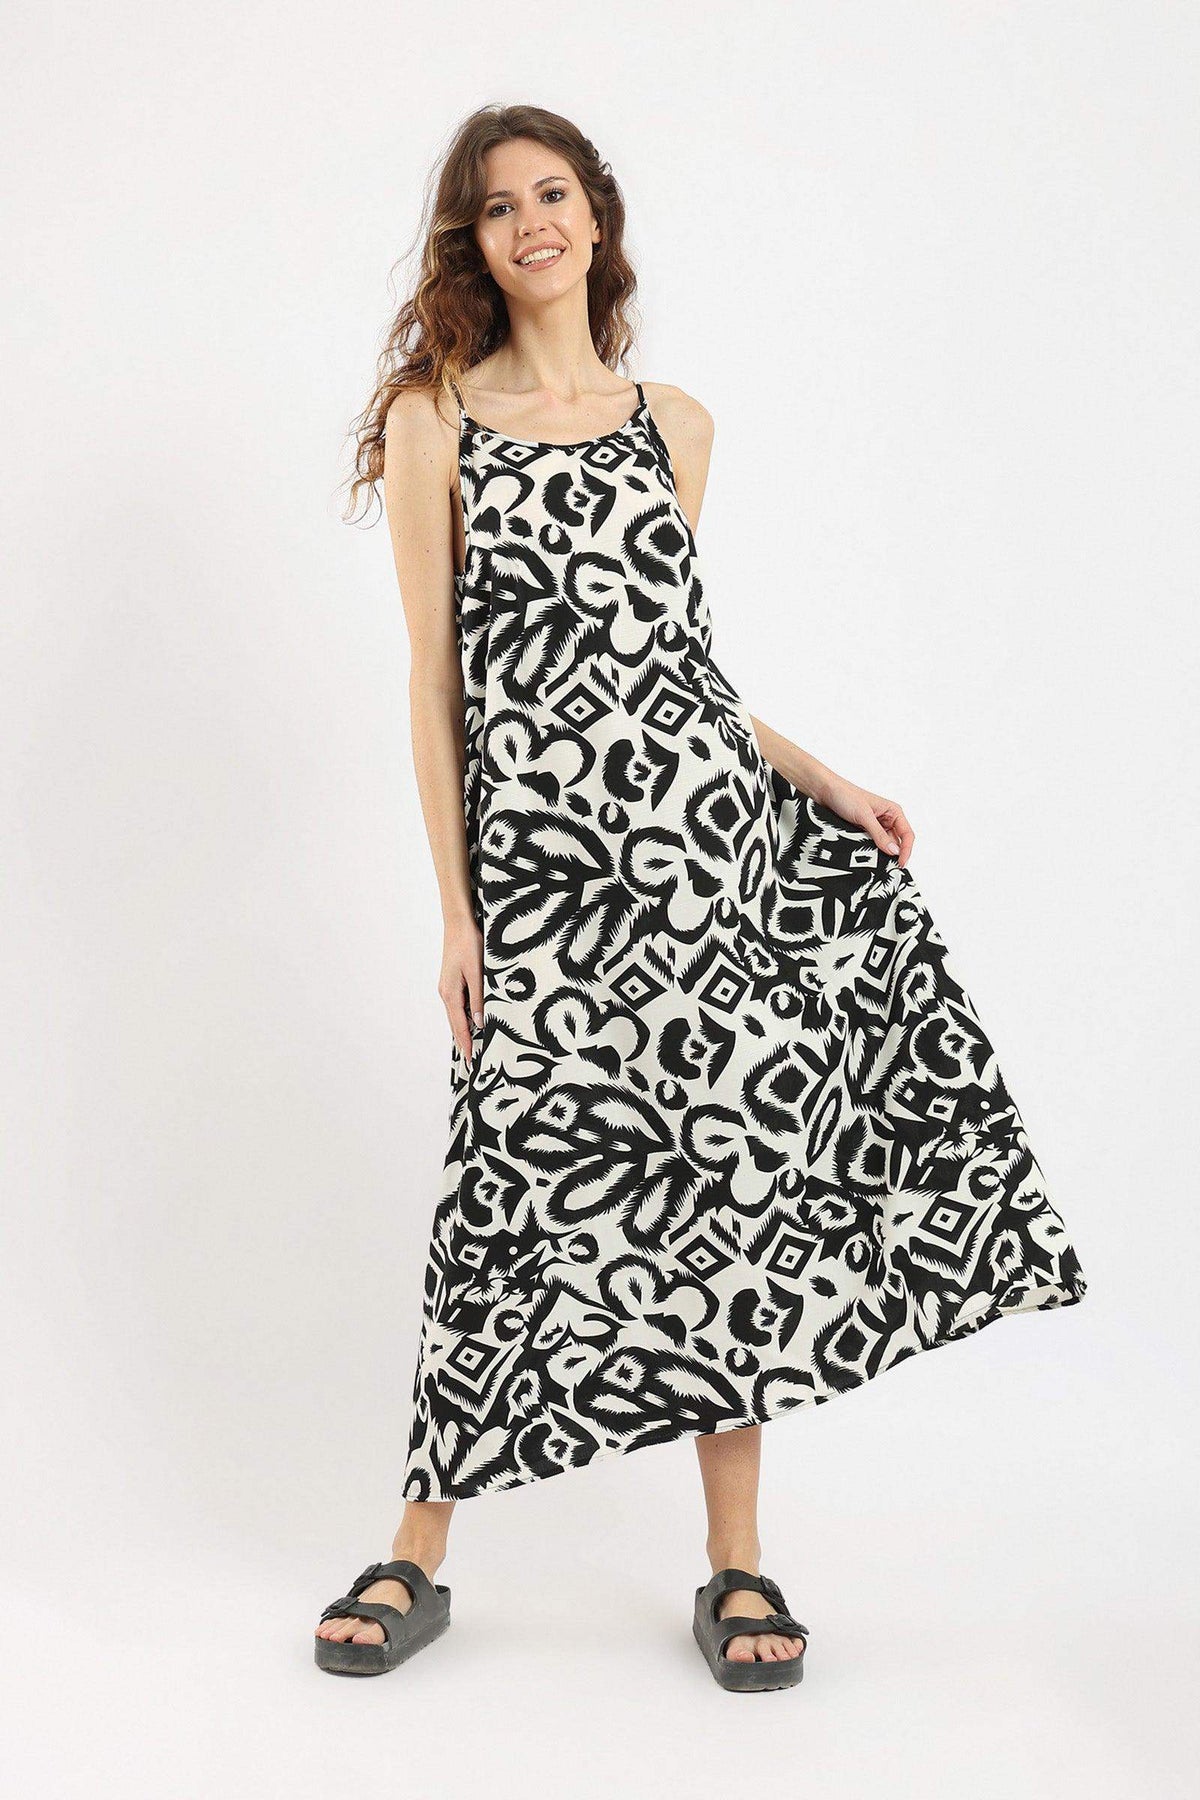 Black & White Sleeveless Dress - Carina - كارينا